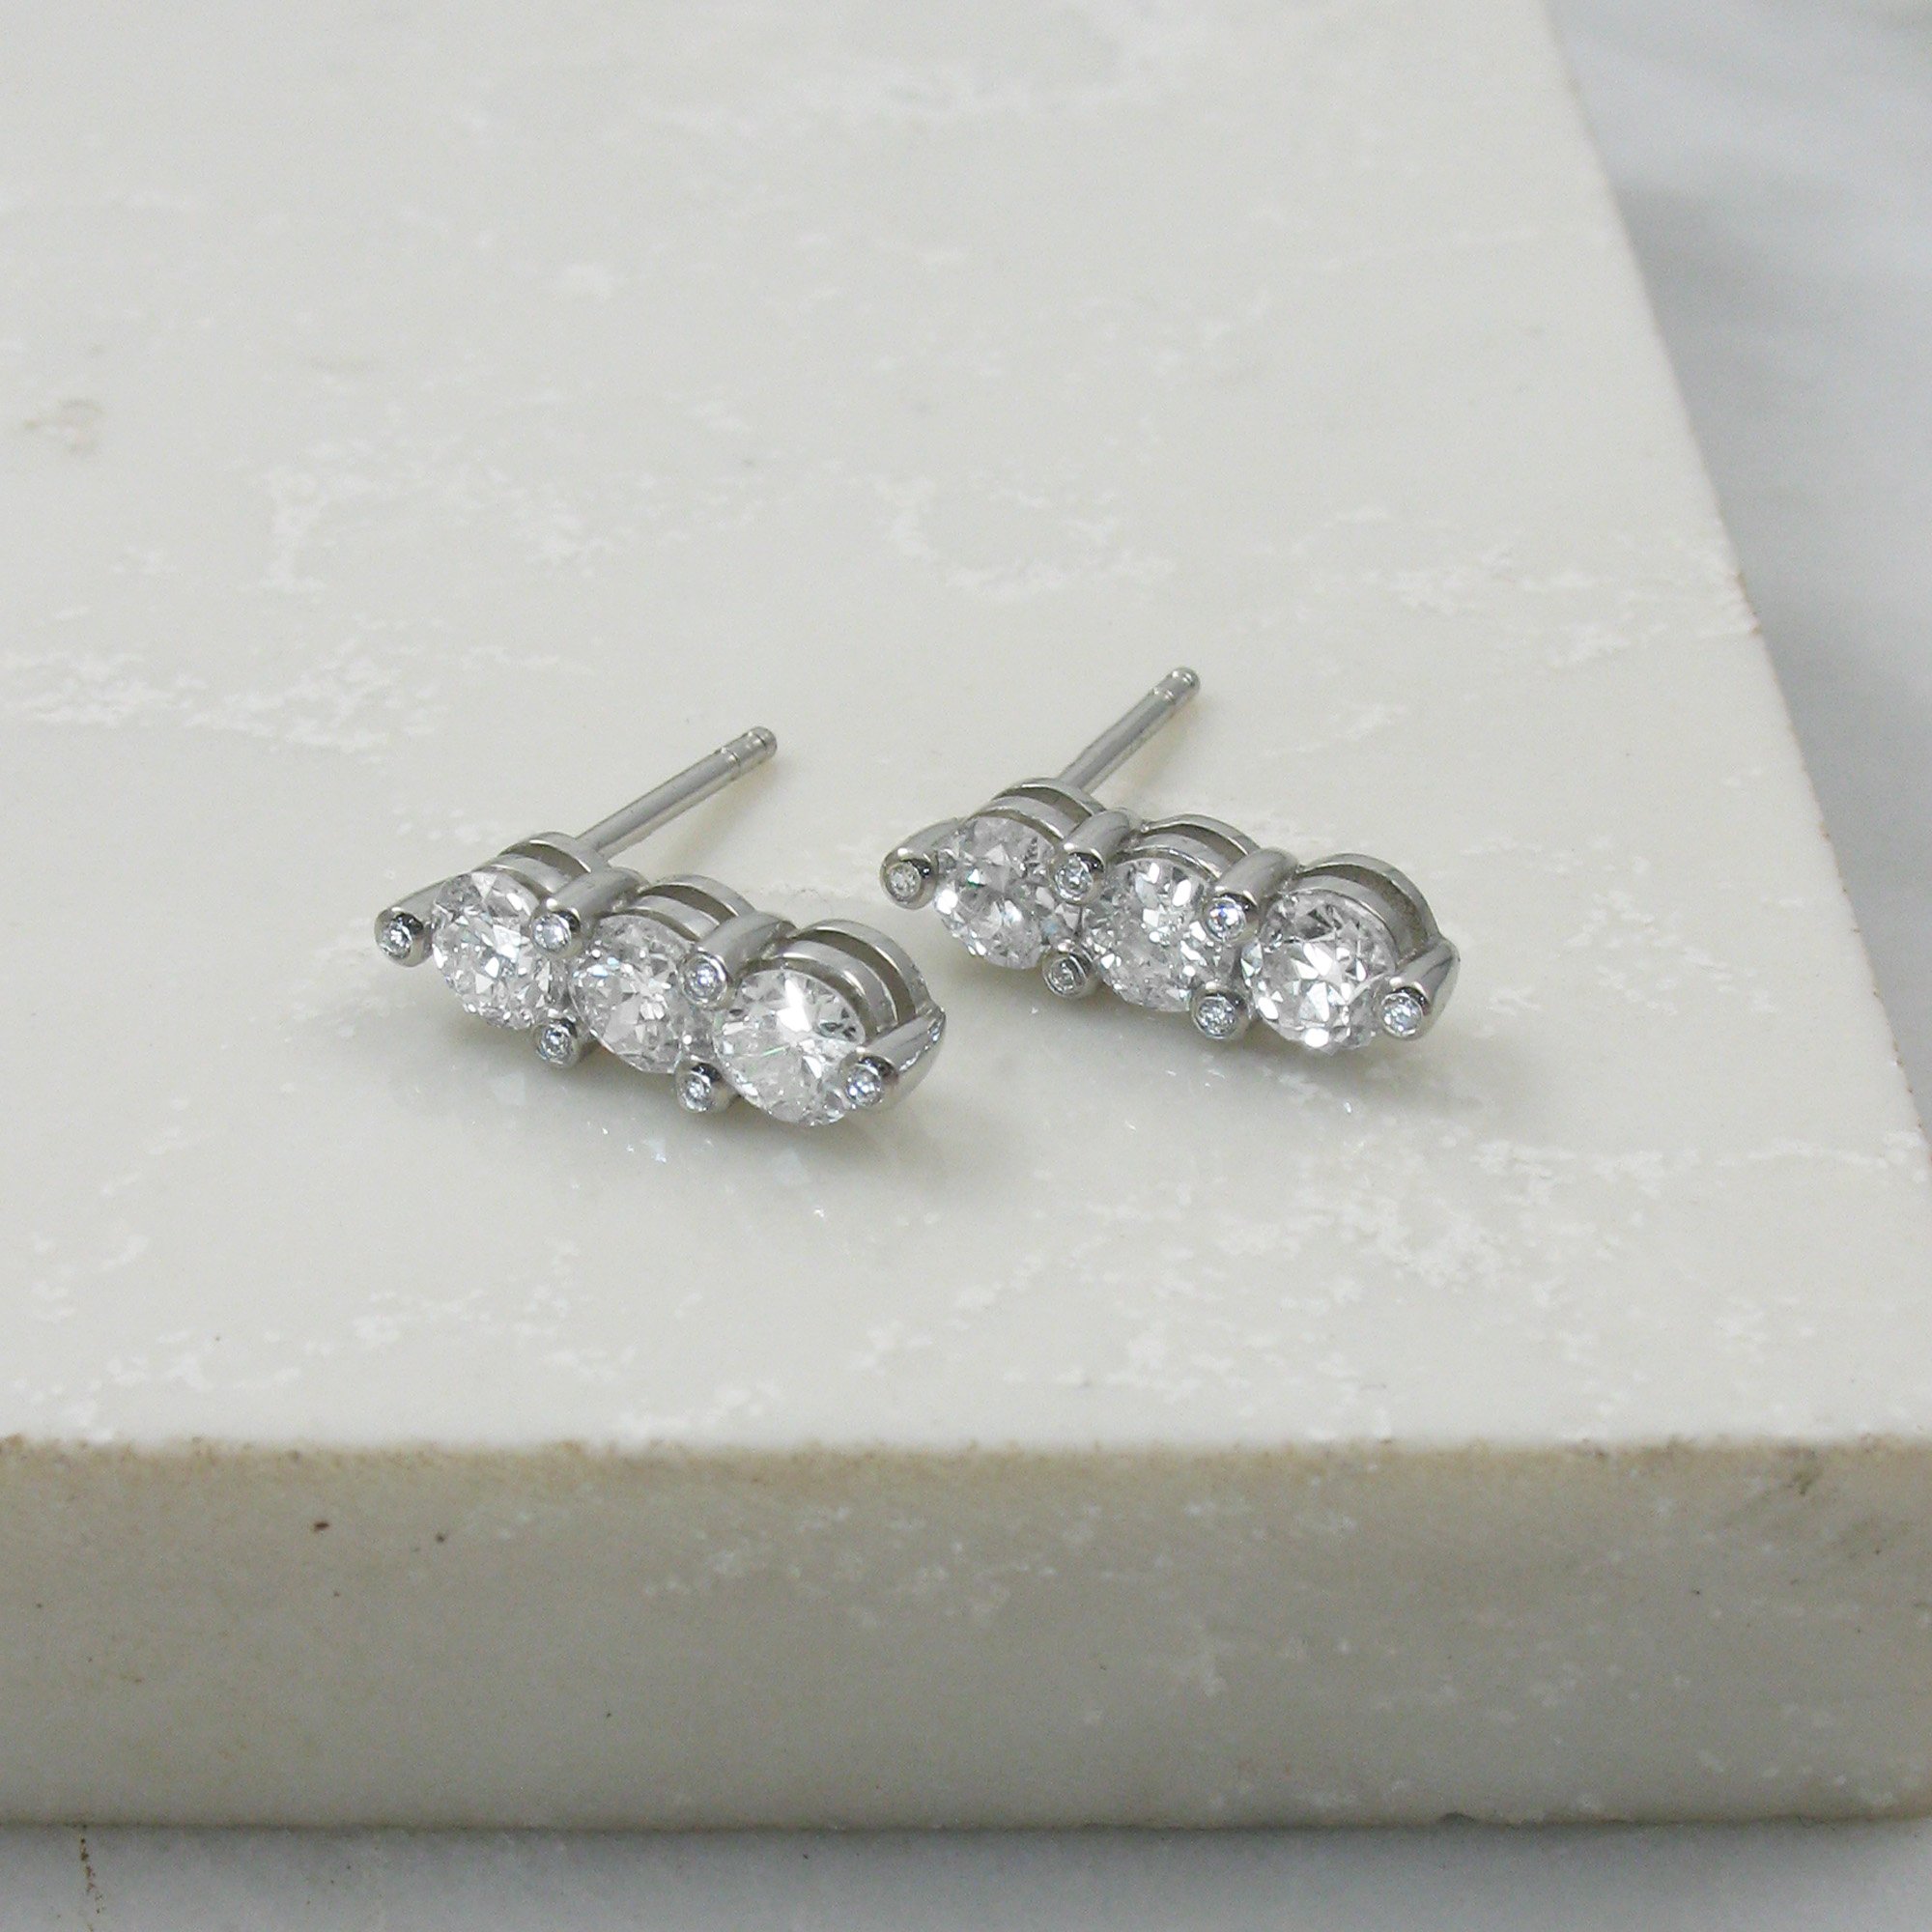 A pair of bespoke three stone diamond drop earrings